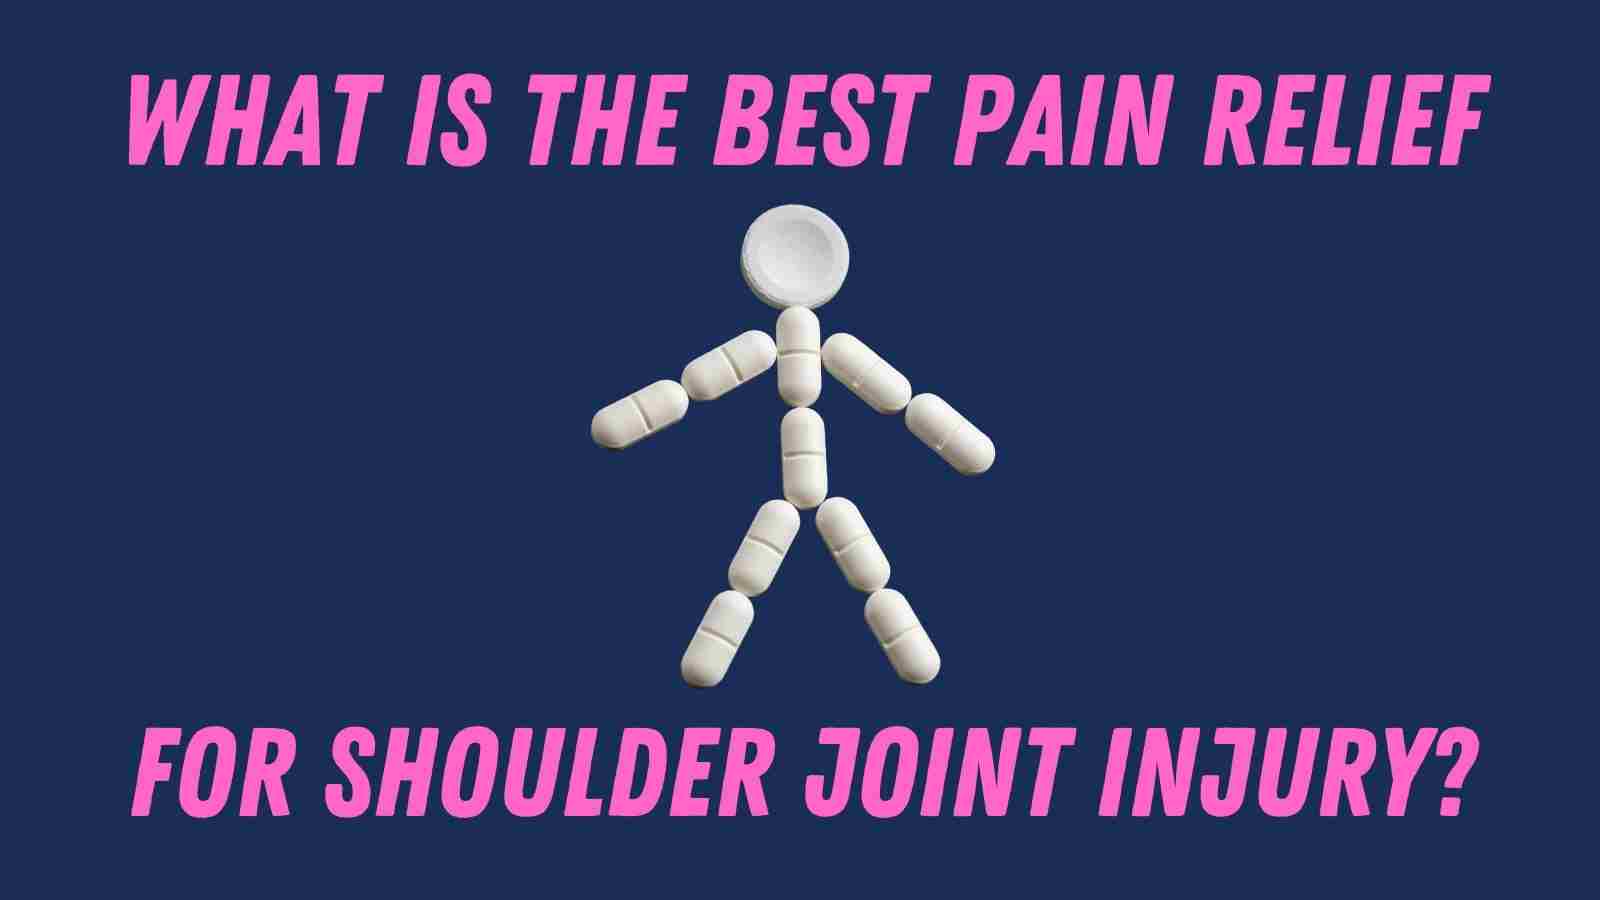 https://shoulderandelbowlondon.com/wp-content/uploads/2021/09/Copy-of-What-is-the-best-pain-relief.jpg